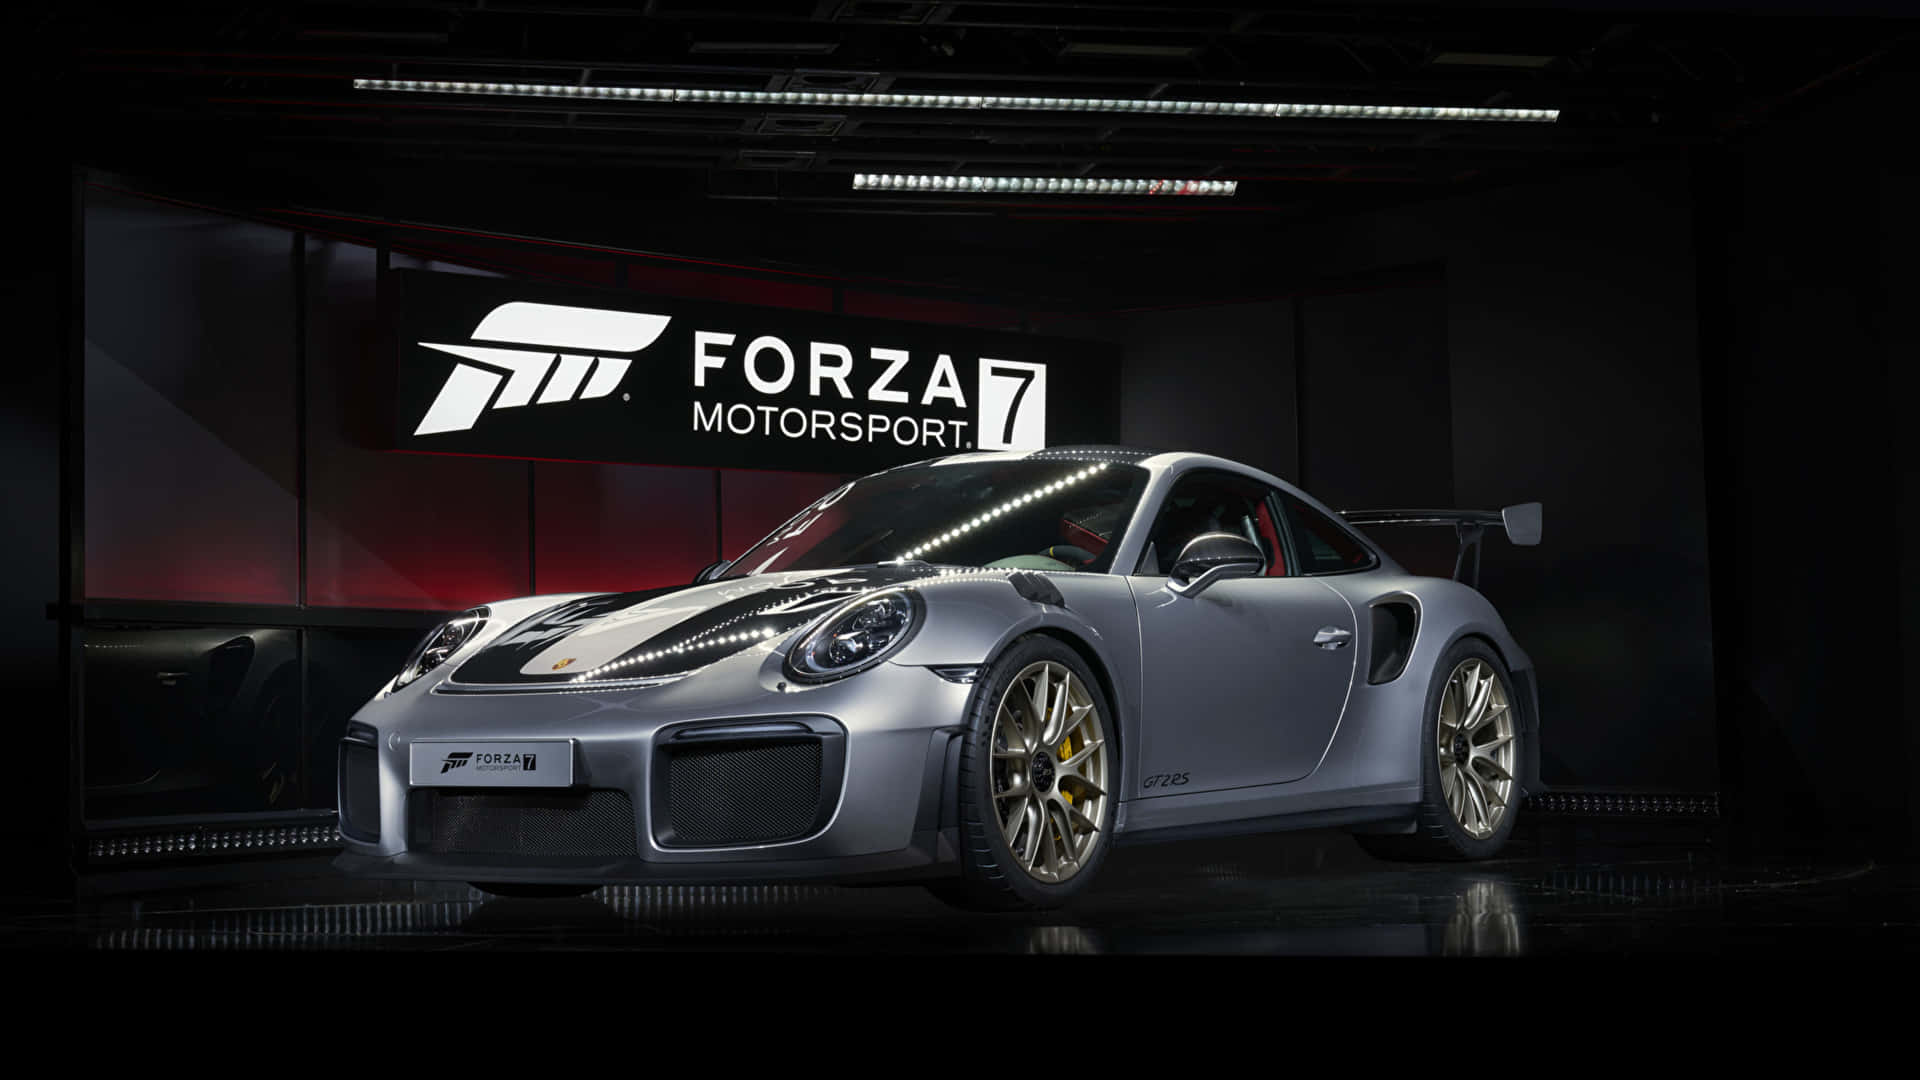 4k Fondods De Forza Motorsport 7